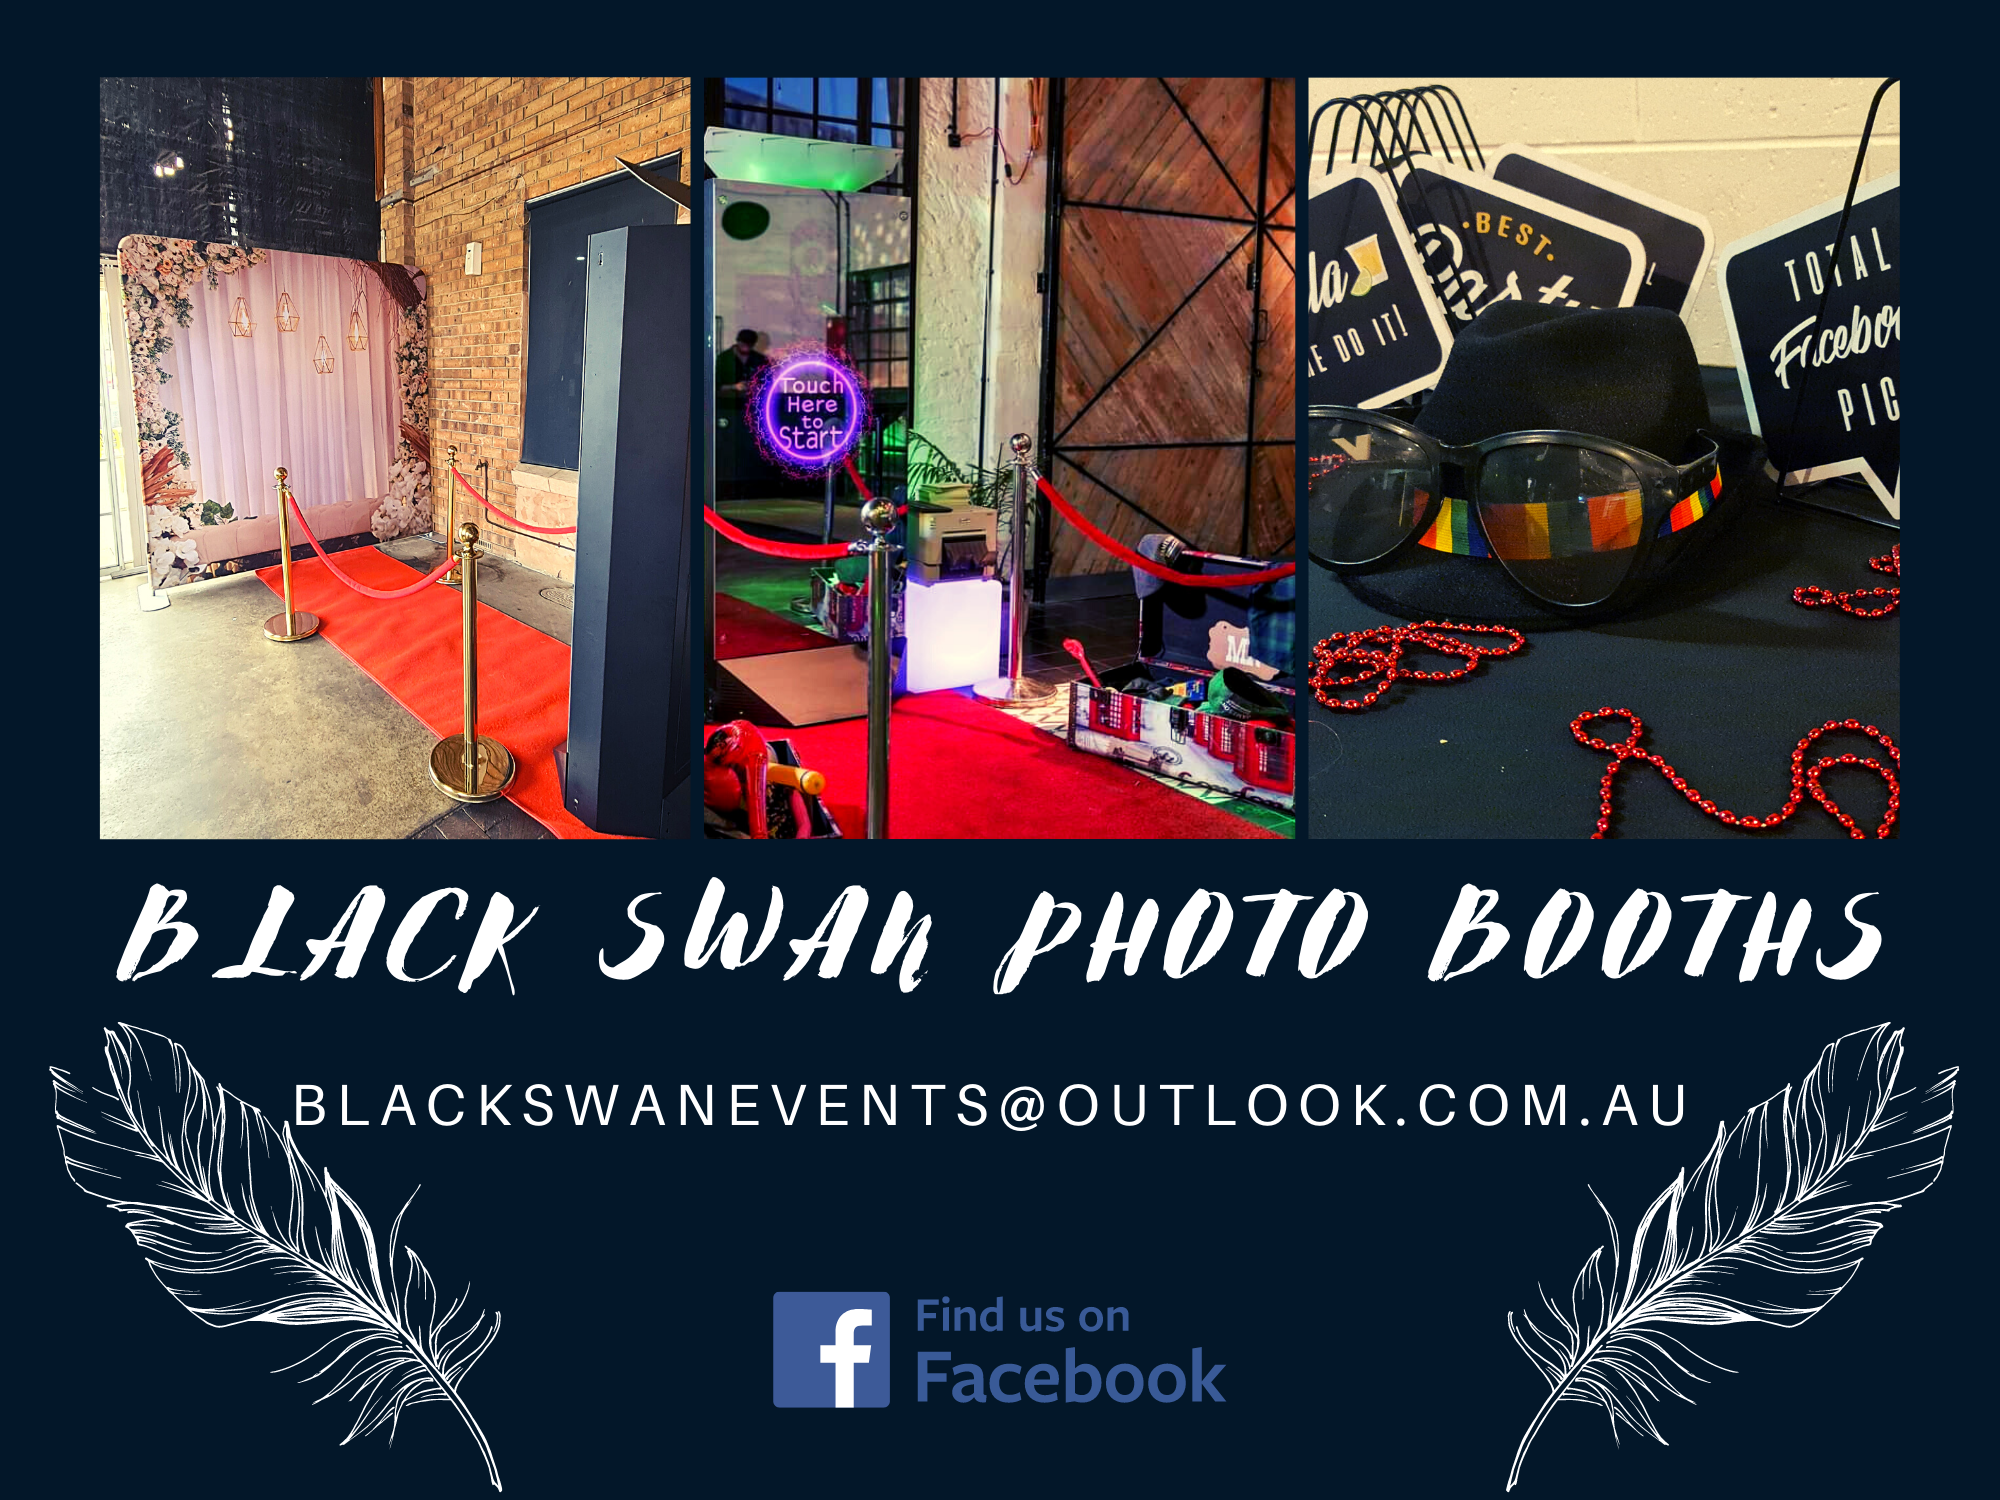 Black Swan Photo Booth